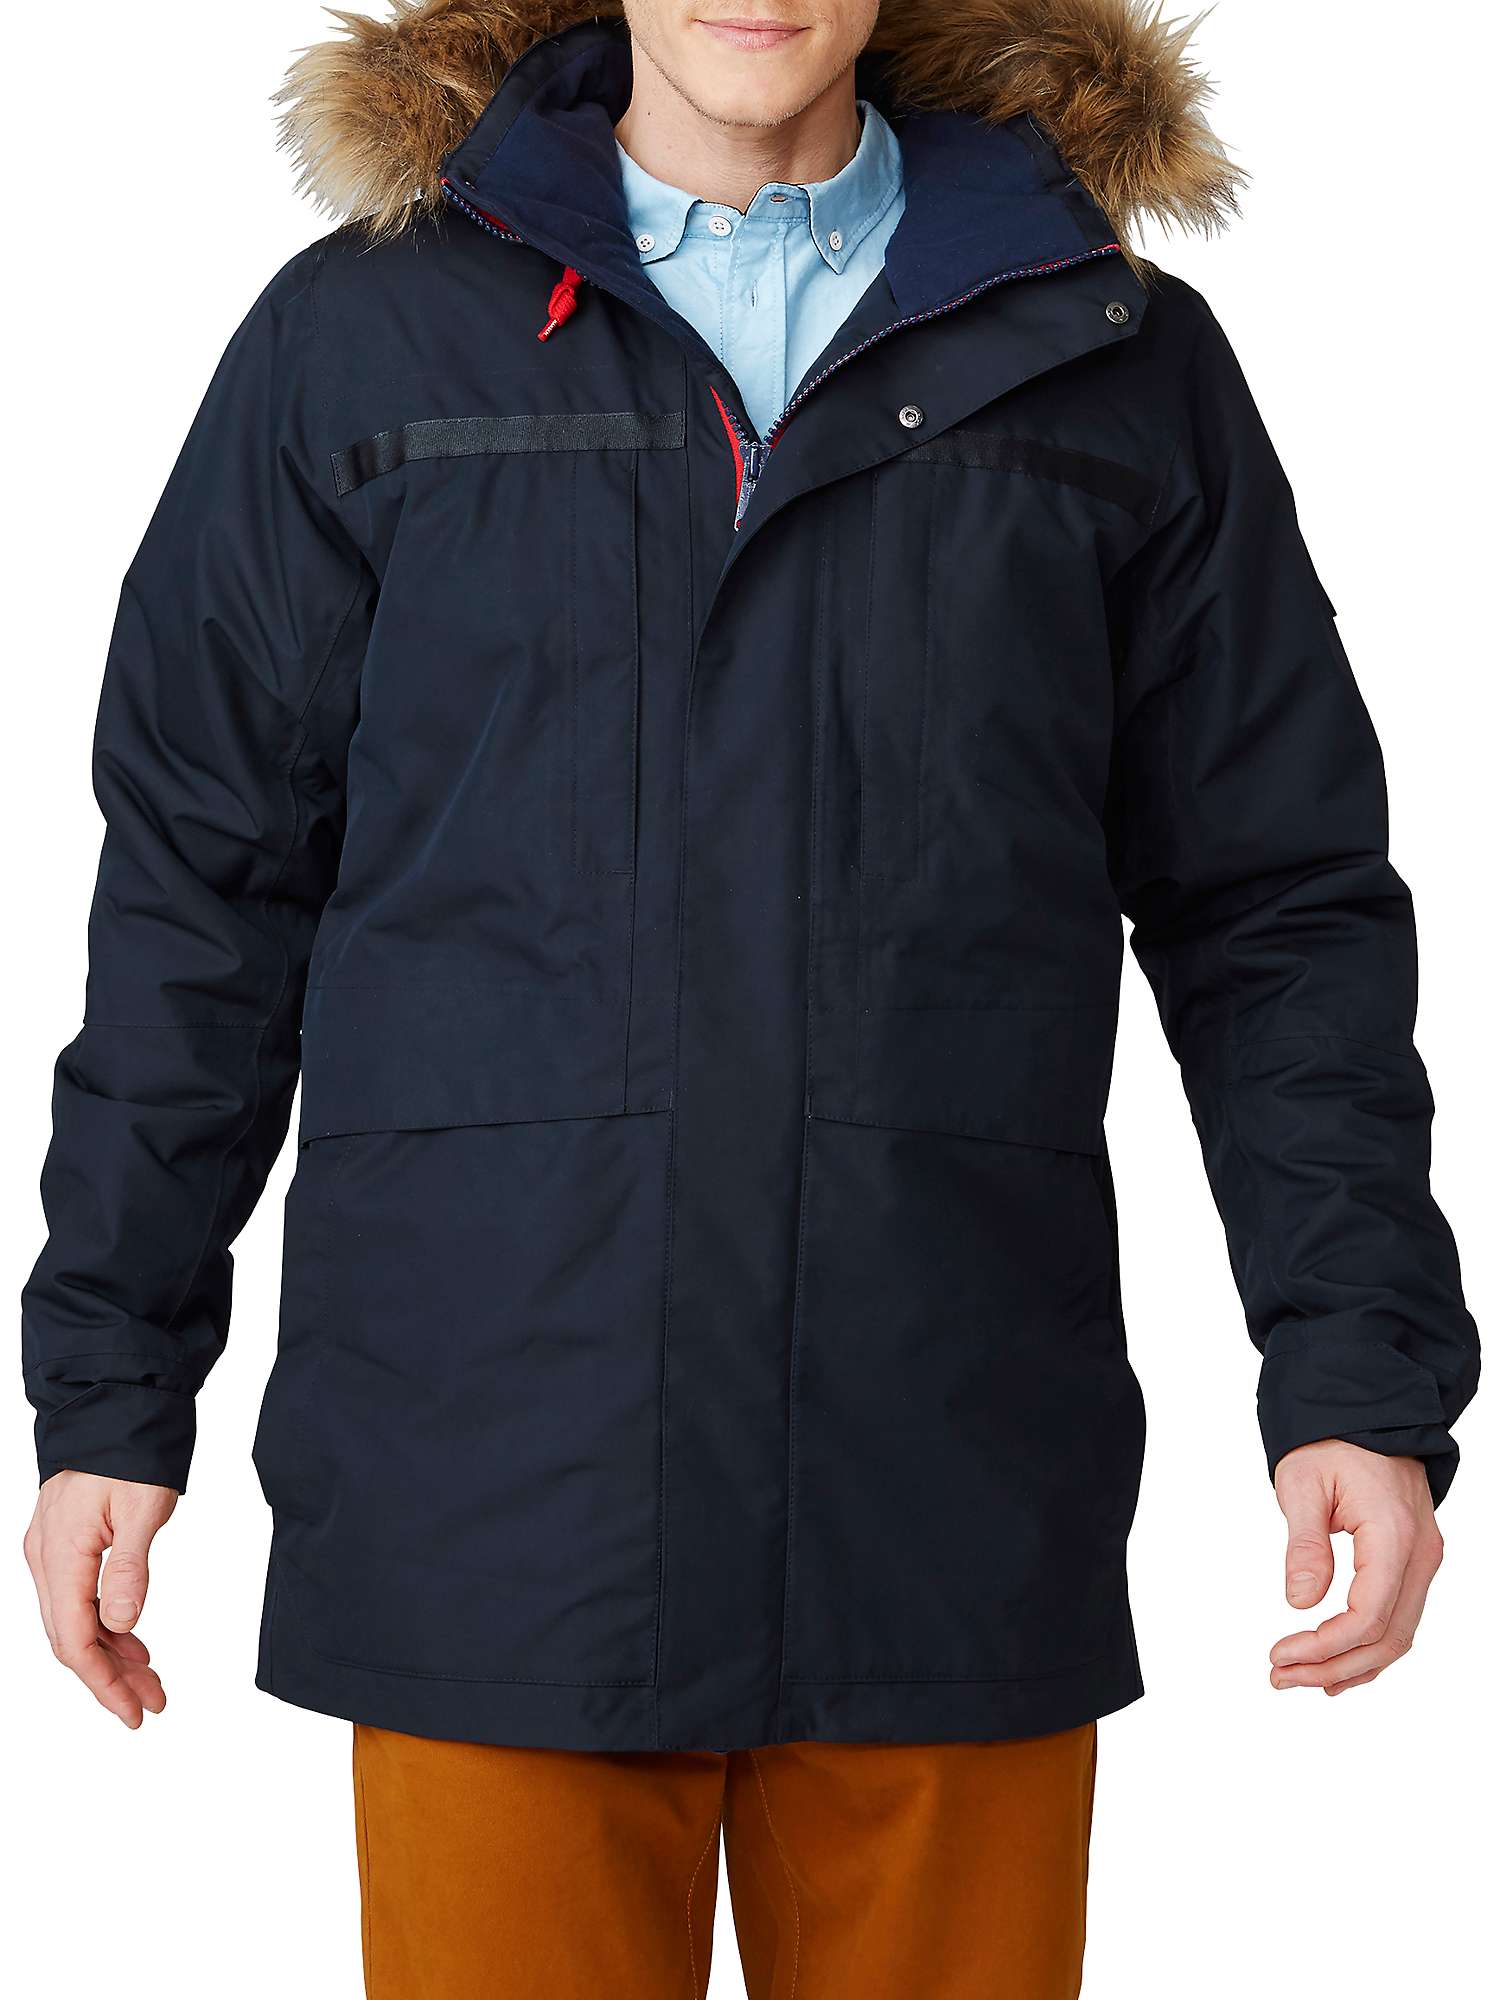 Buy Helly Hansen Coastal 2 Waterproof Men's Parka Jacket, Navy Online at johnlewis.com